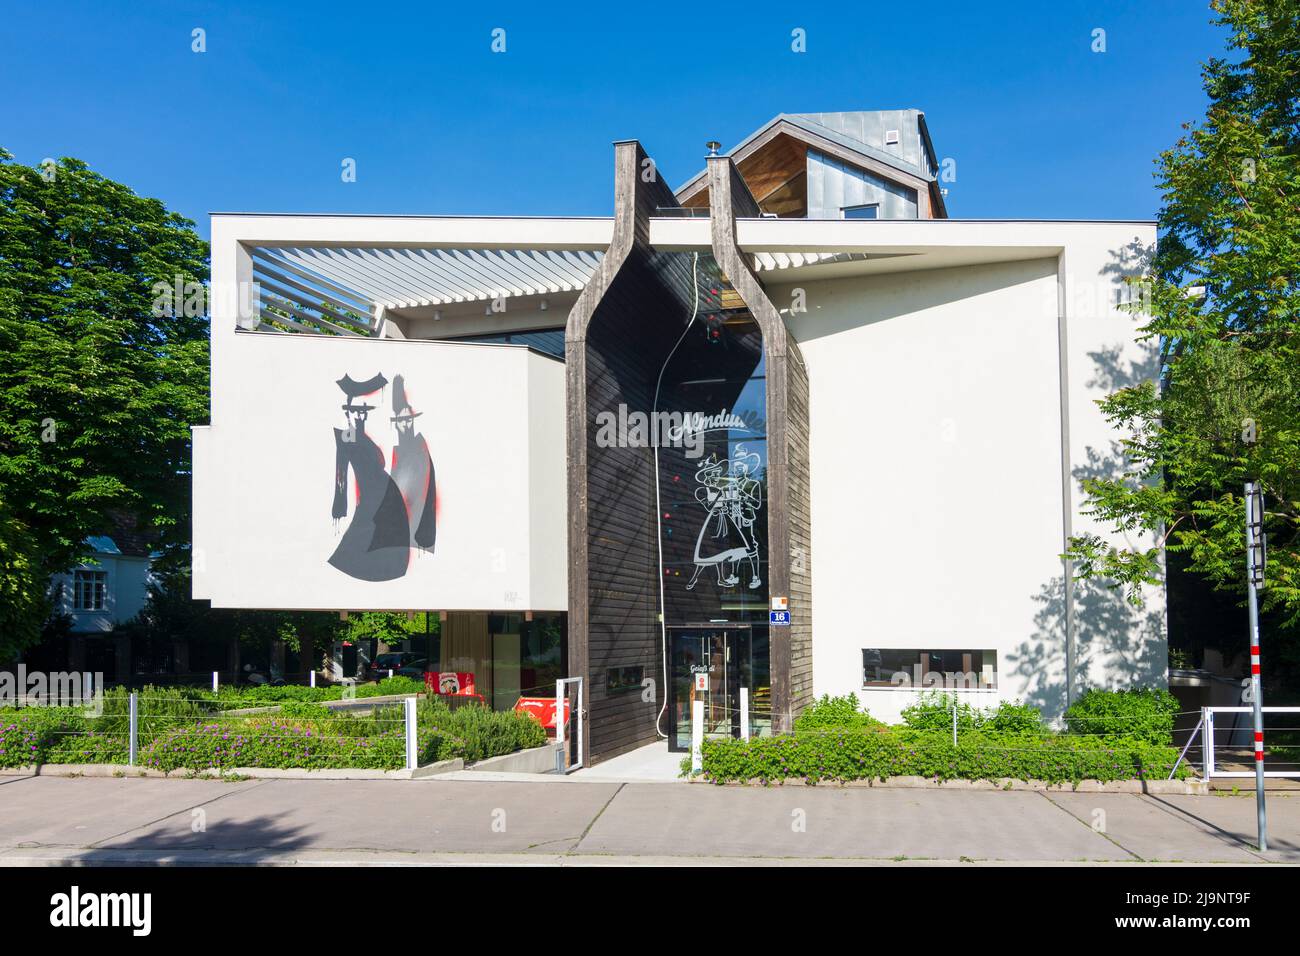 Viena: Sede de Almdudler Grinzinger Allee 16 en 19. Döbling, Viena, Austria Foto de stock